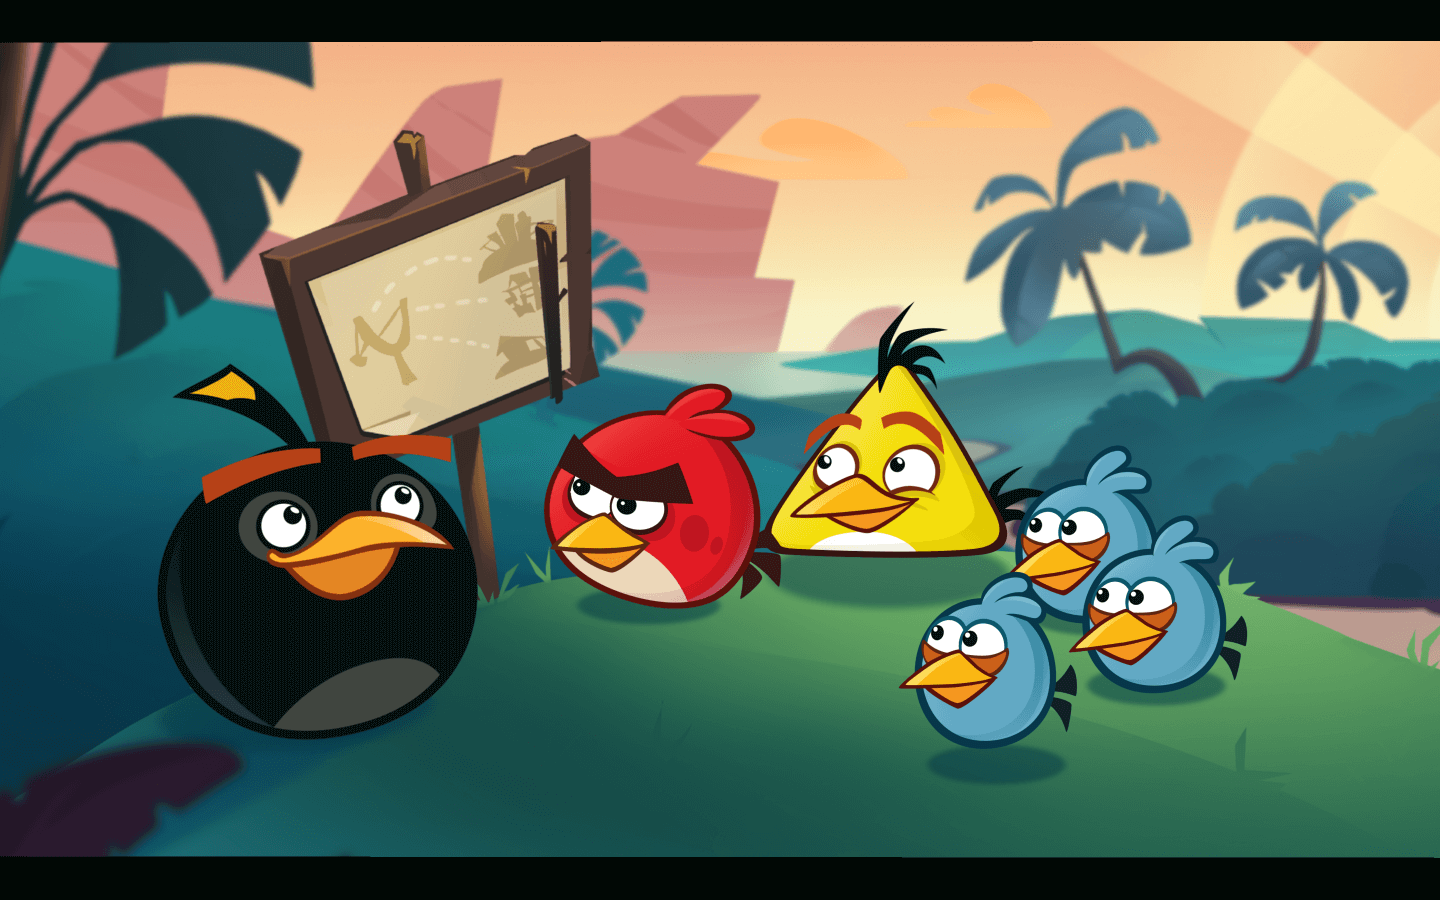 Mac游戏推荐 愤怒的小鸟：重启 Angry Birds Reloaded for Mac 经典休闲益智游戏